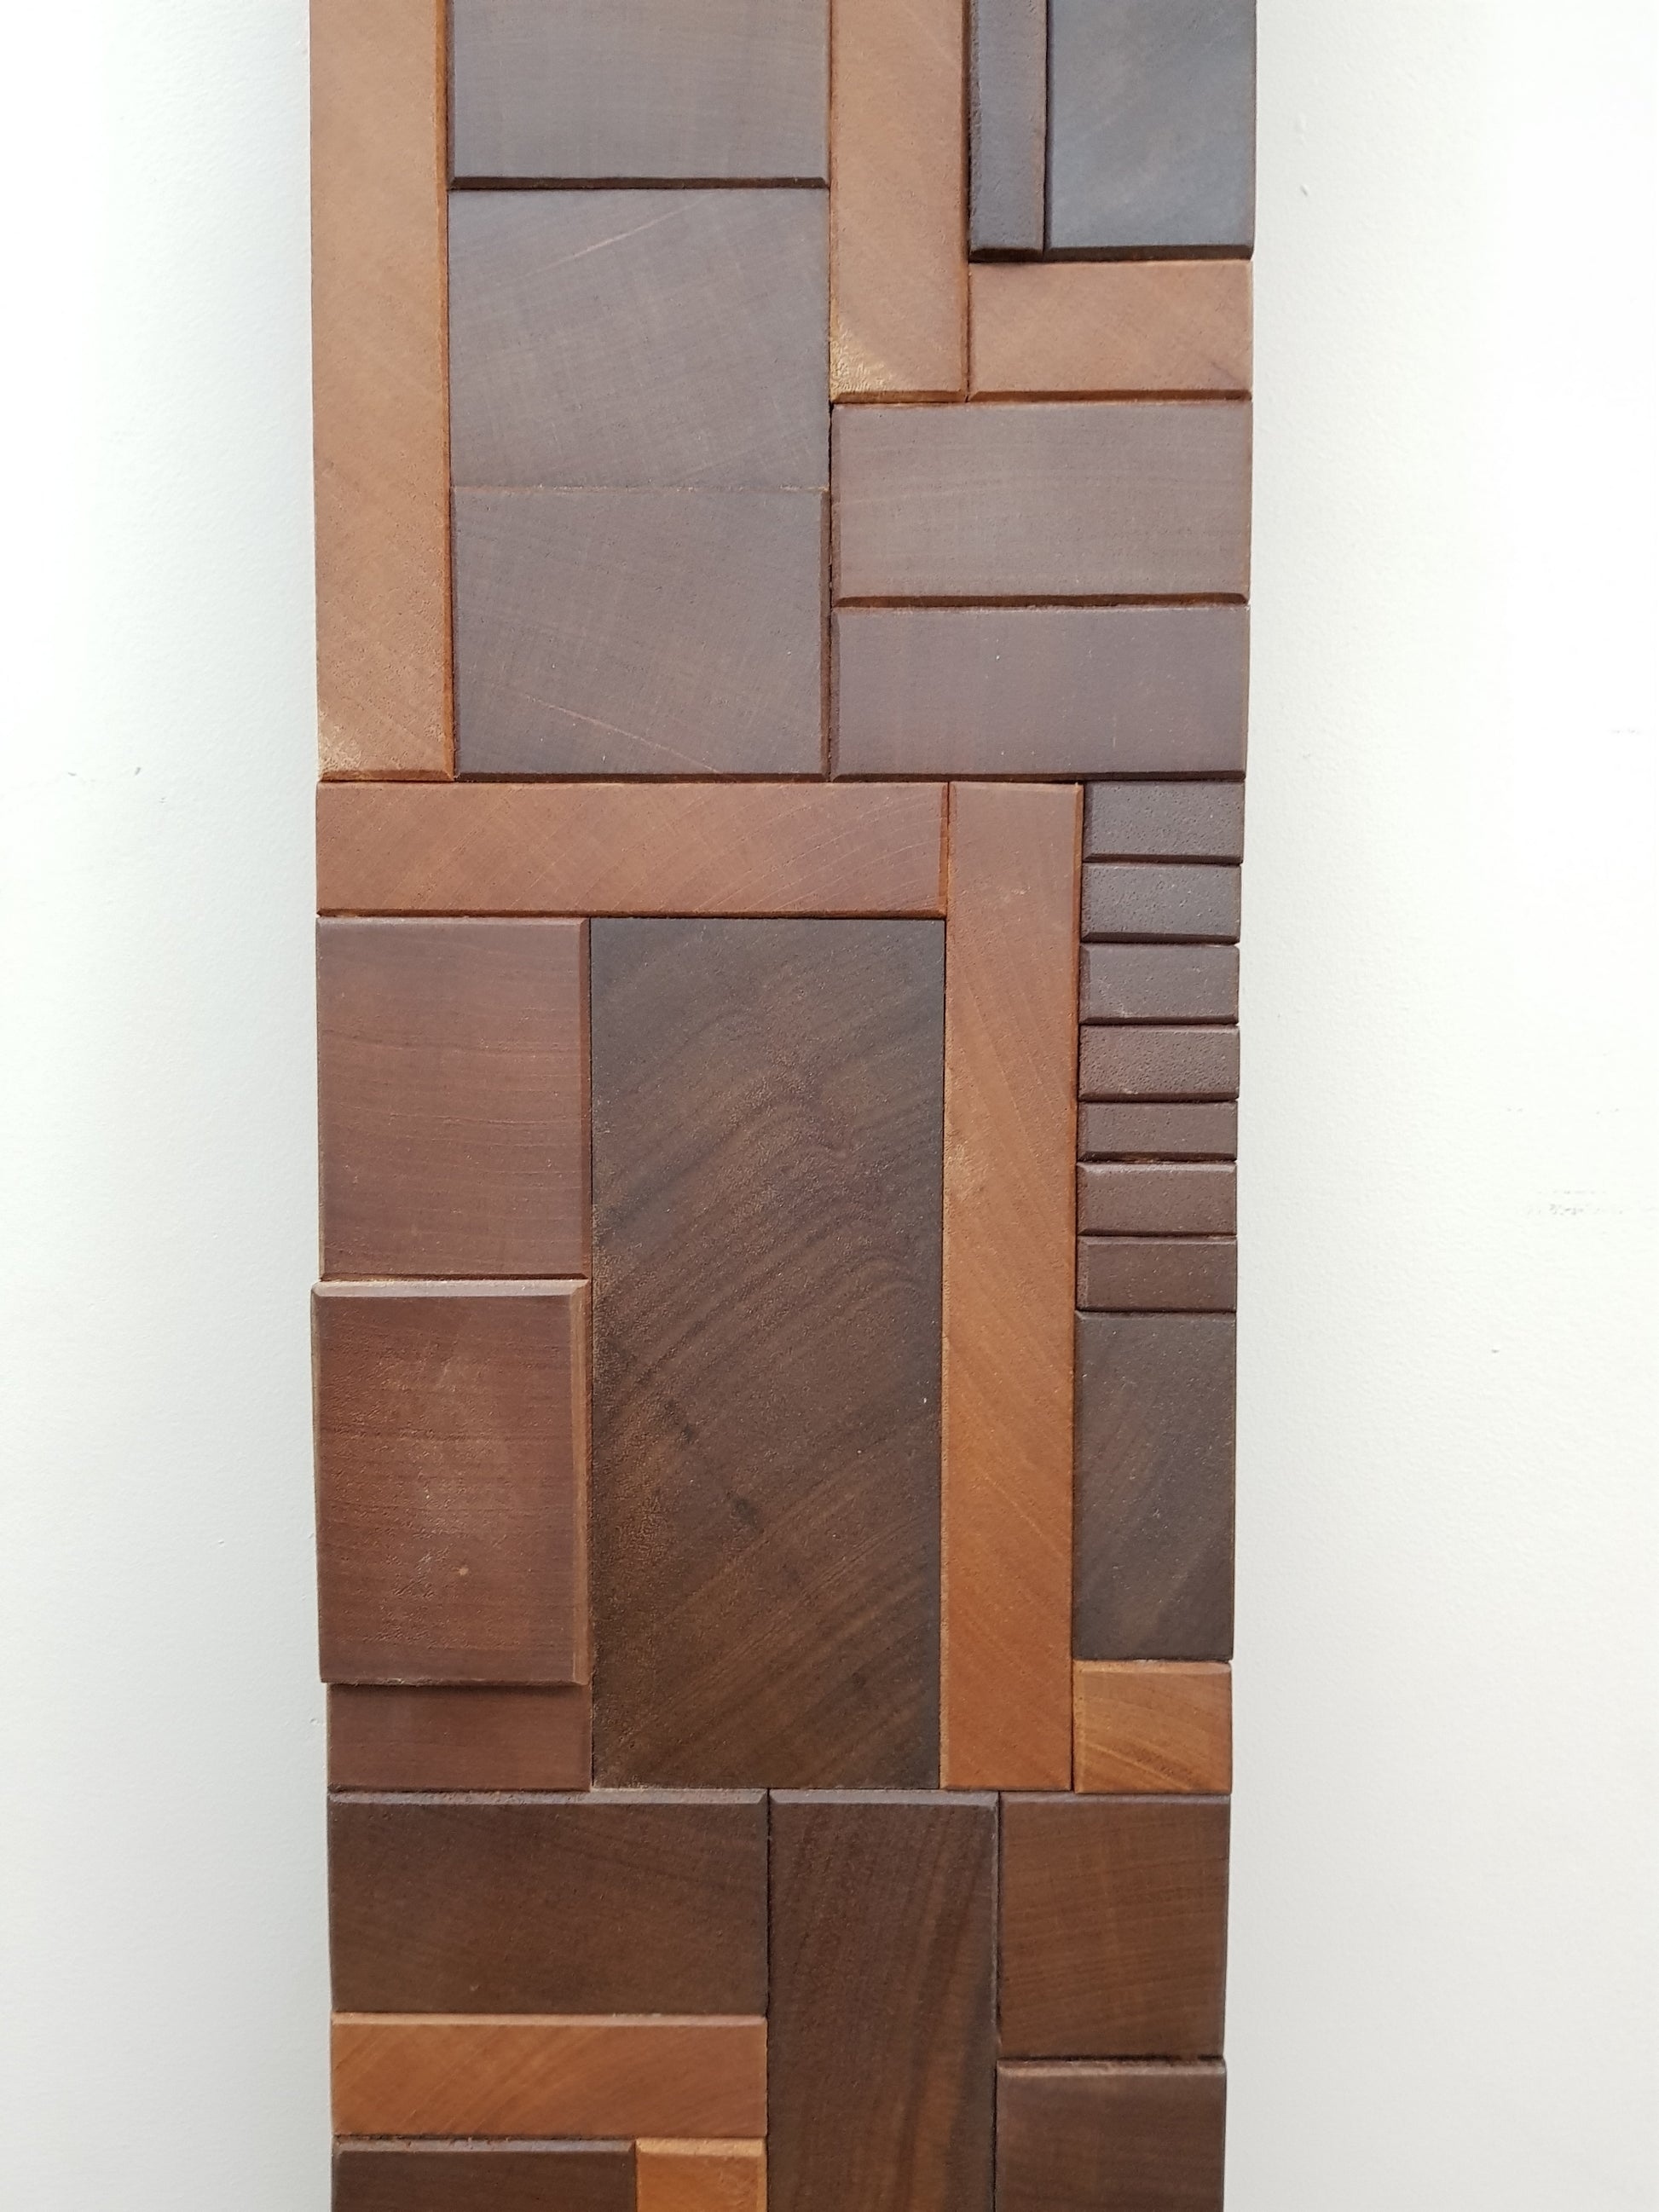 Statement artwork mirror frame in end grain mahogany